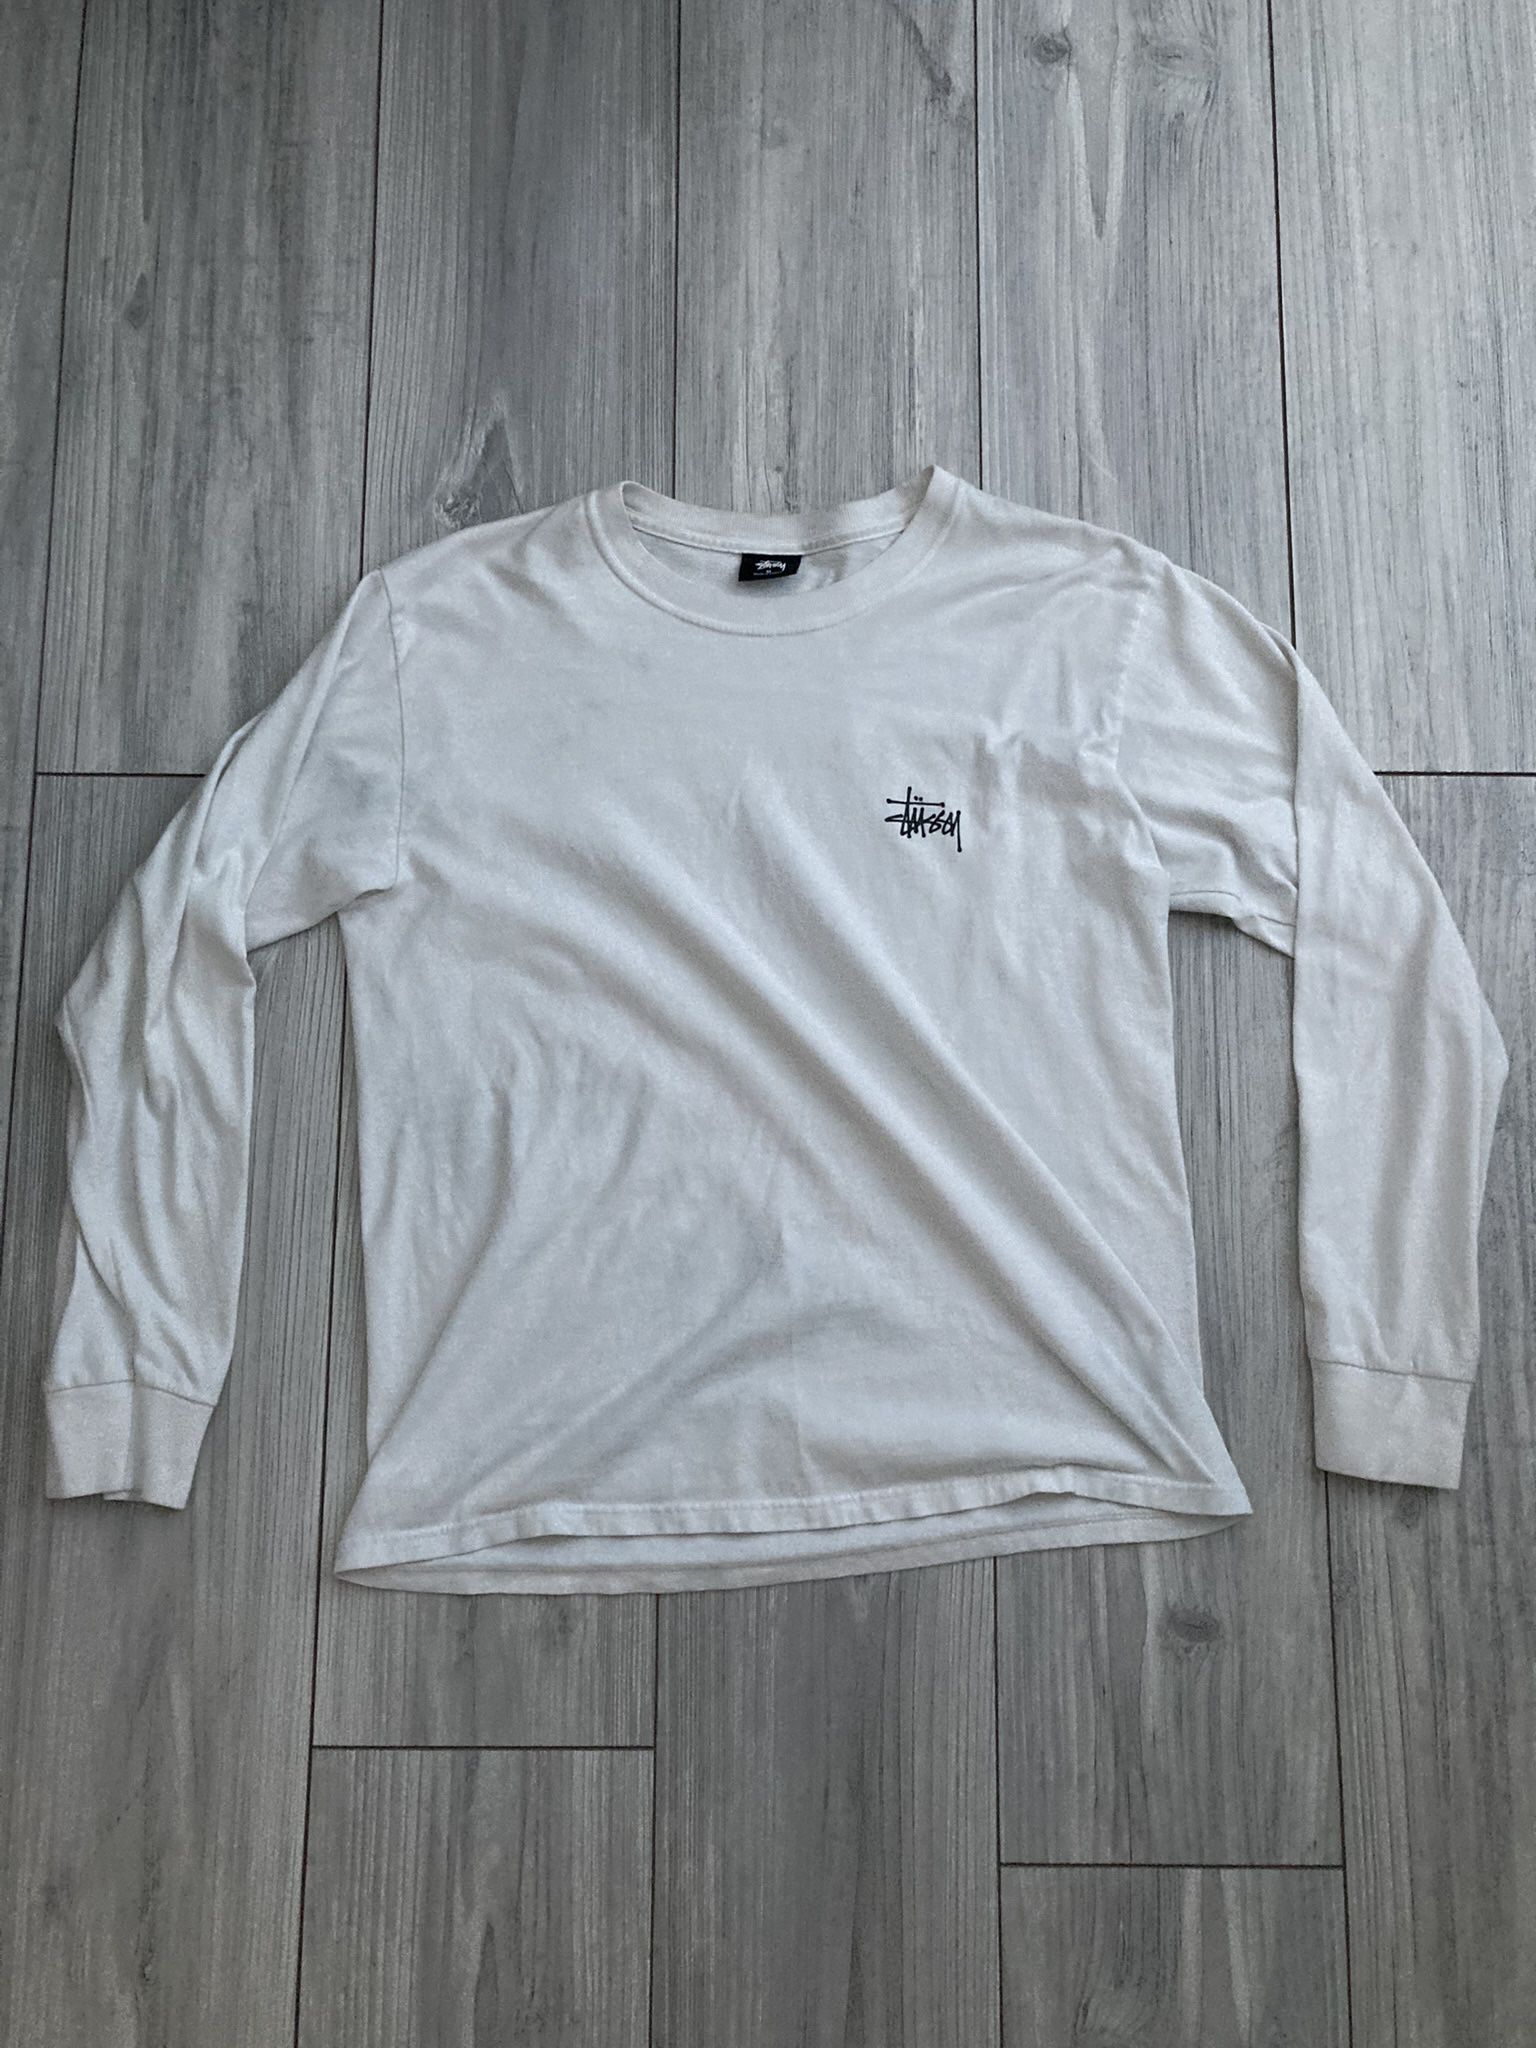 Stussy White Long Sleeve Shirt (medium)